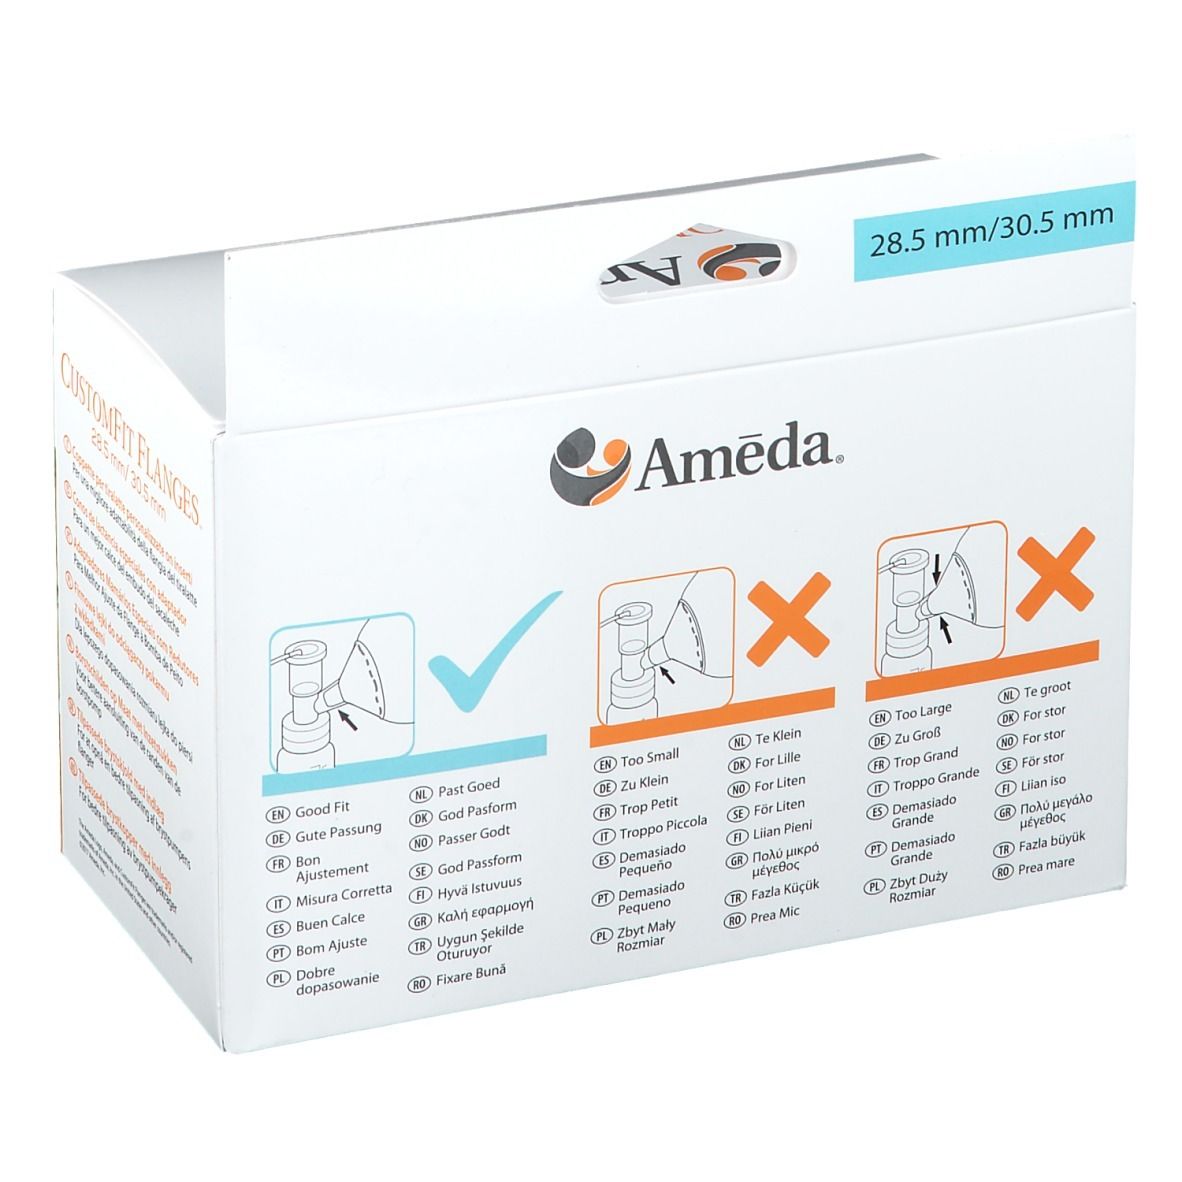 Ameda® CostumFit Flanges™ 28,5 mm / 30,5 mm